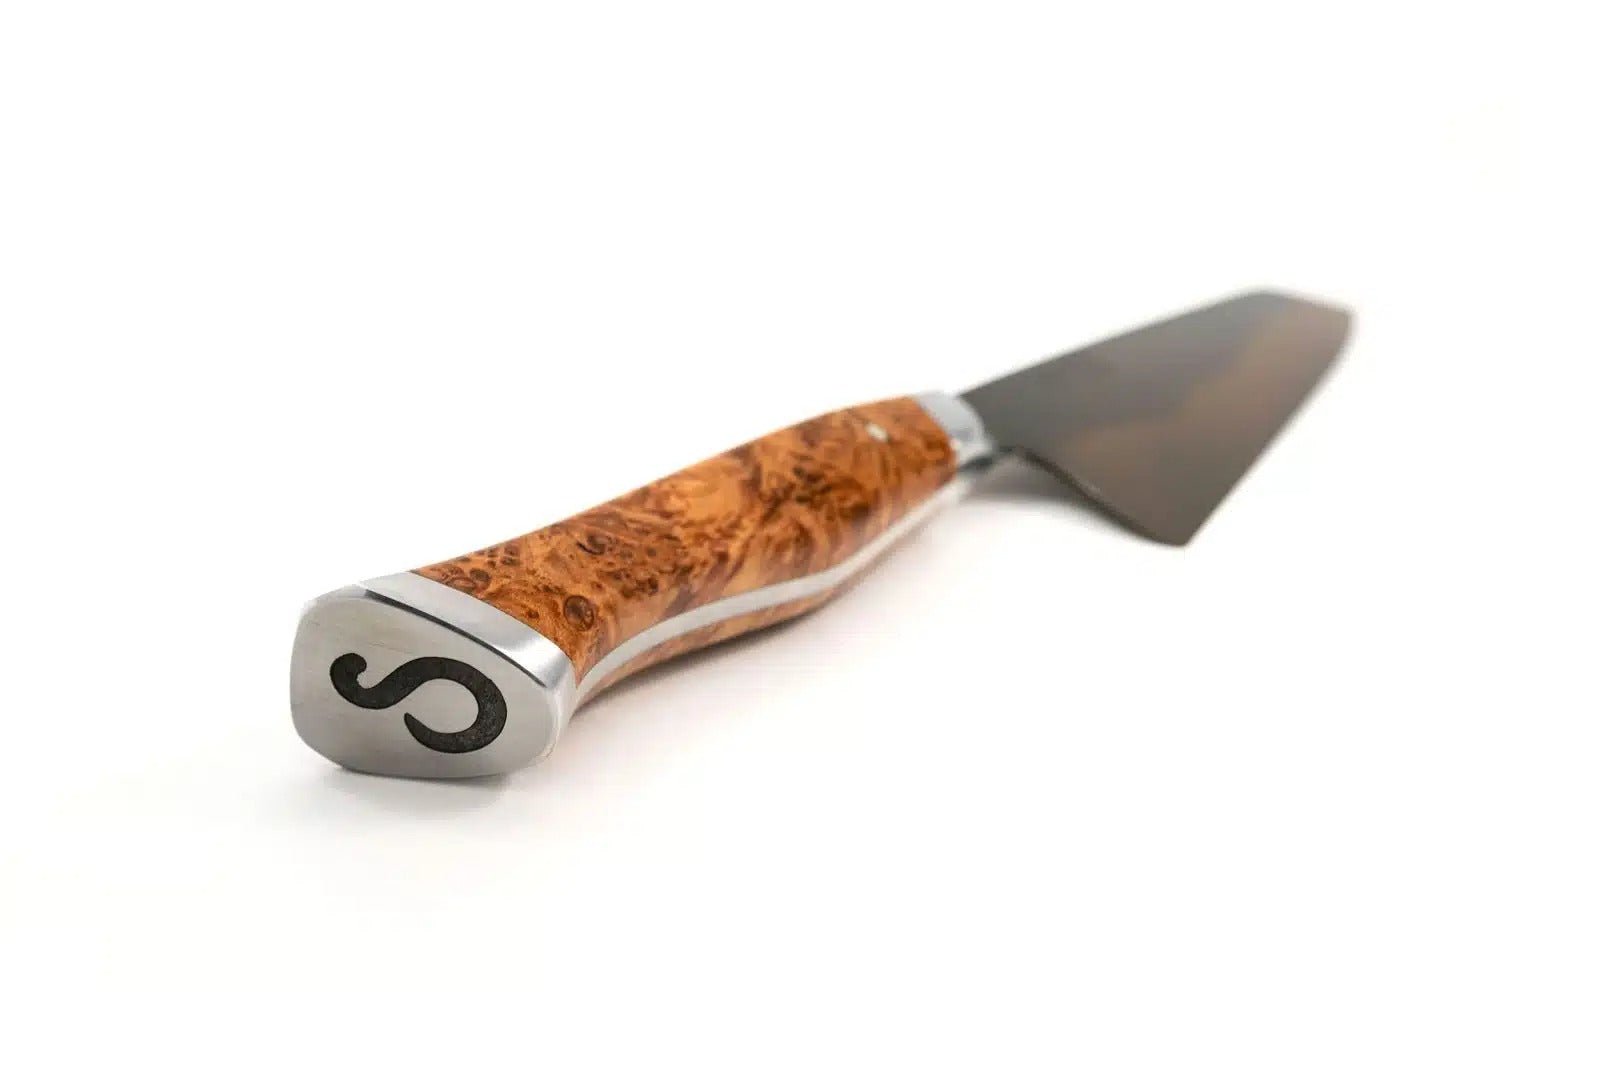 6 Carbon Steel Chef Knife – Wellborn 2R Beef